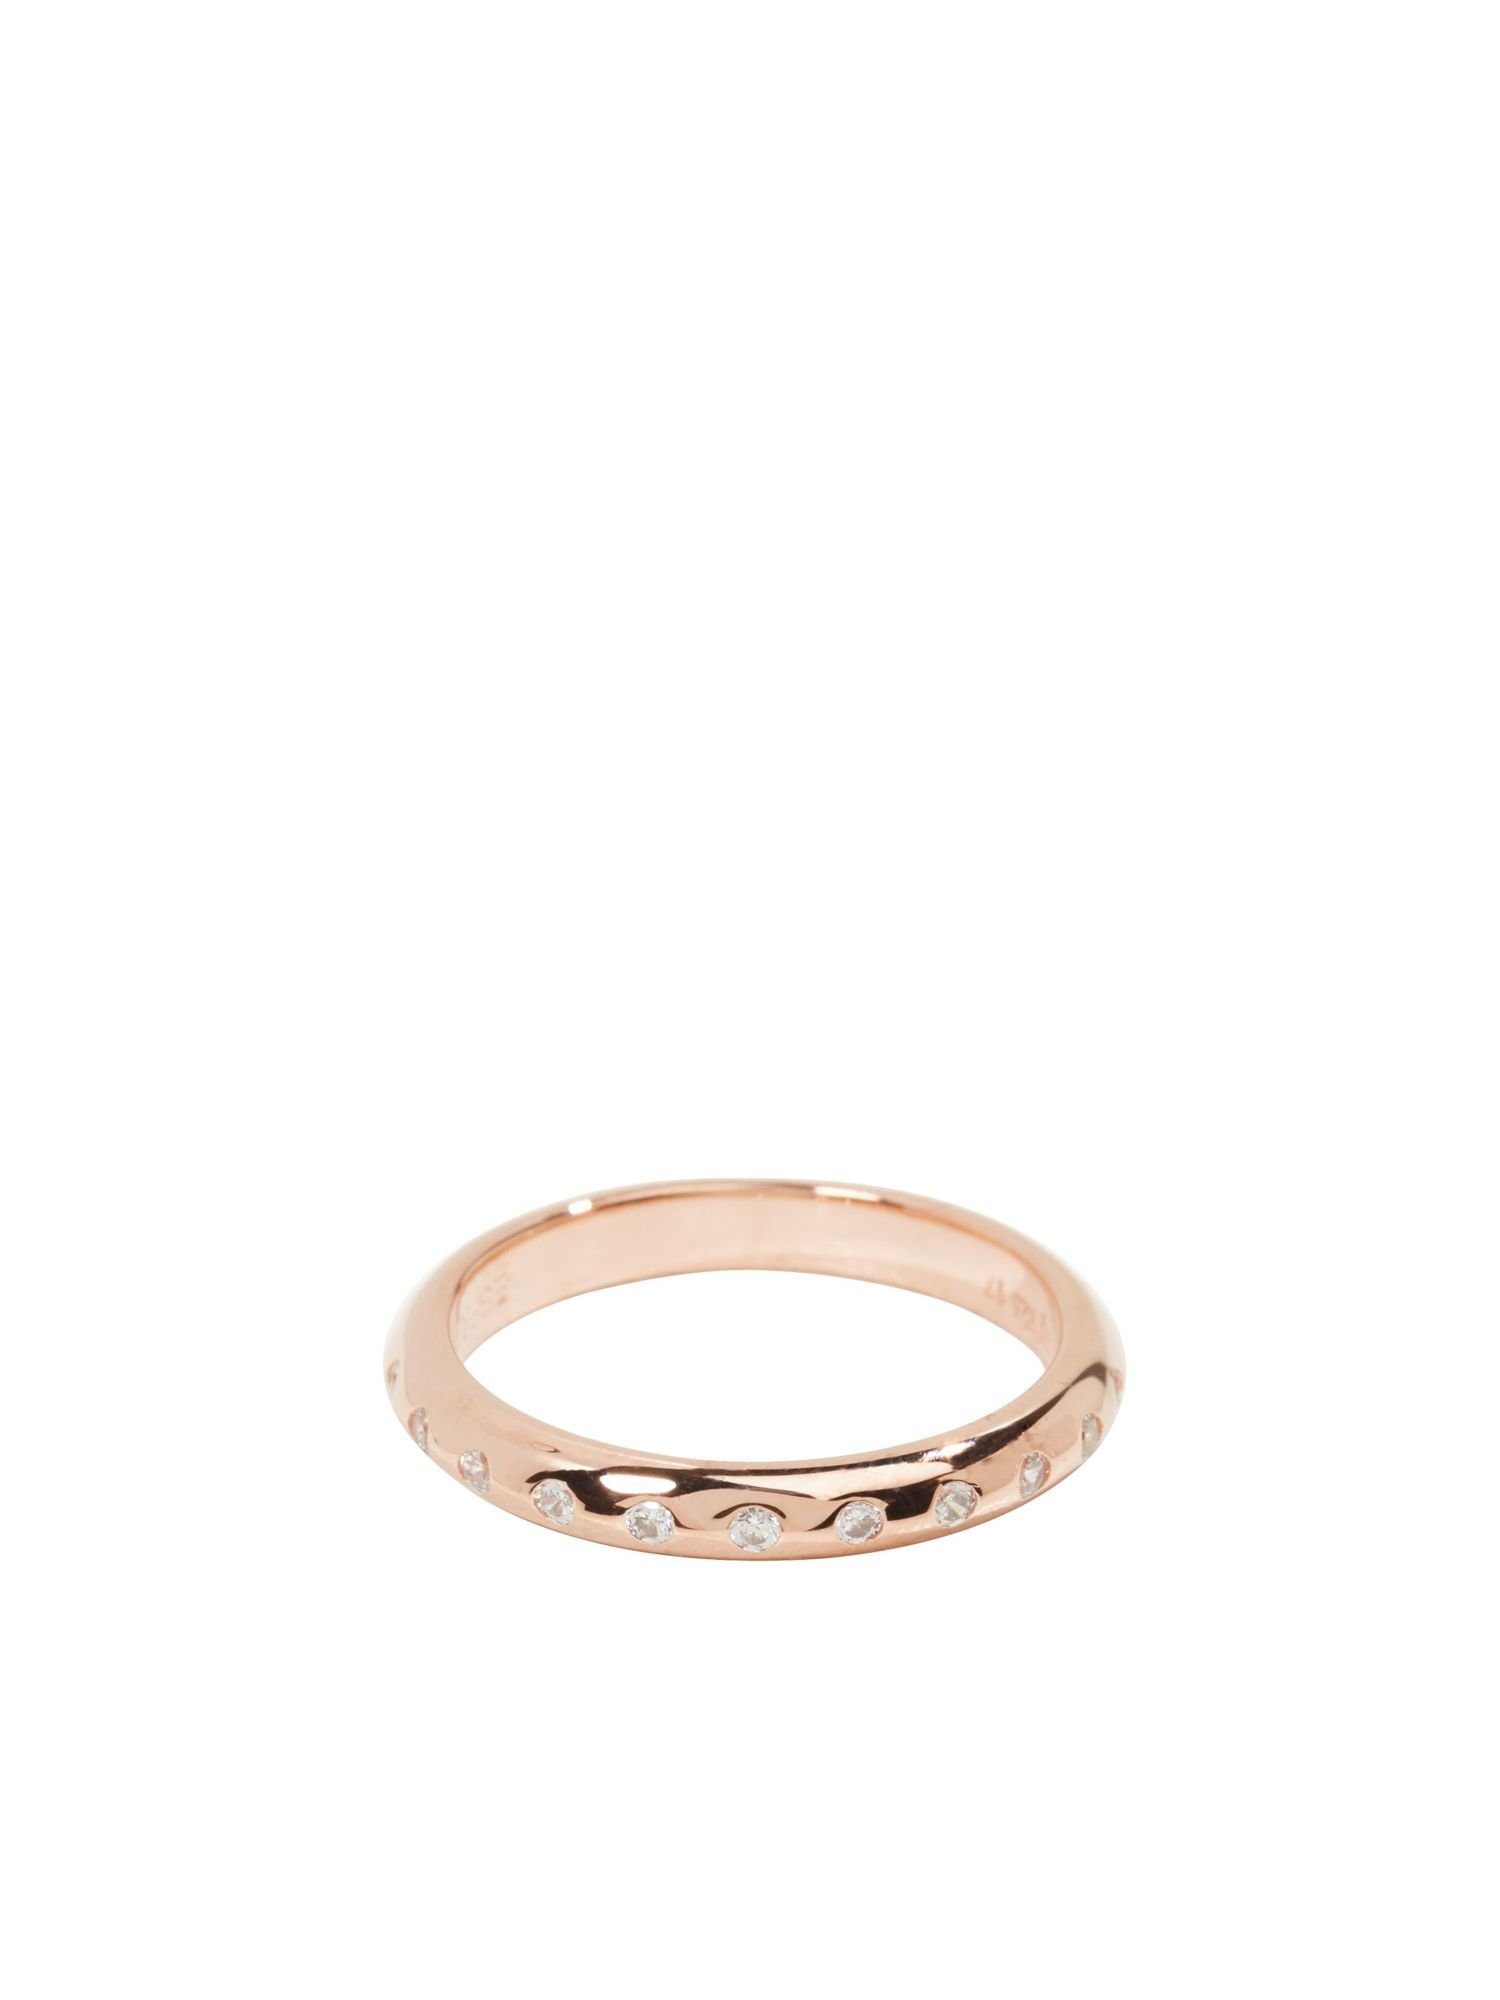 Esprit Silberring Roségold-Ring mit Zirkonia, aus Sterling Silber